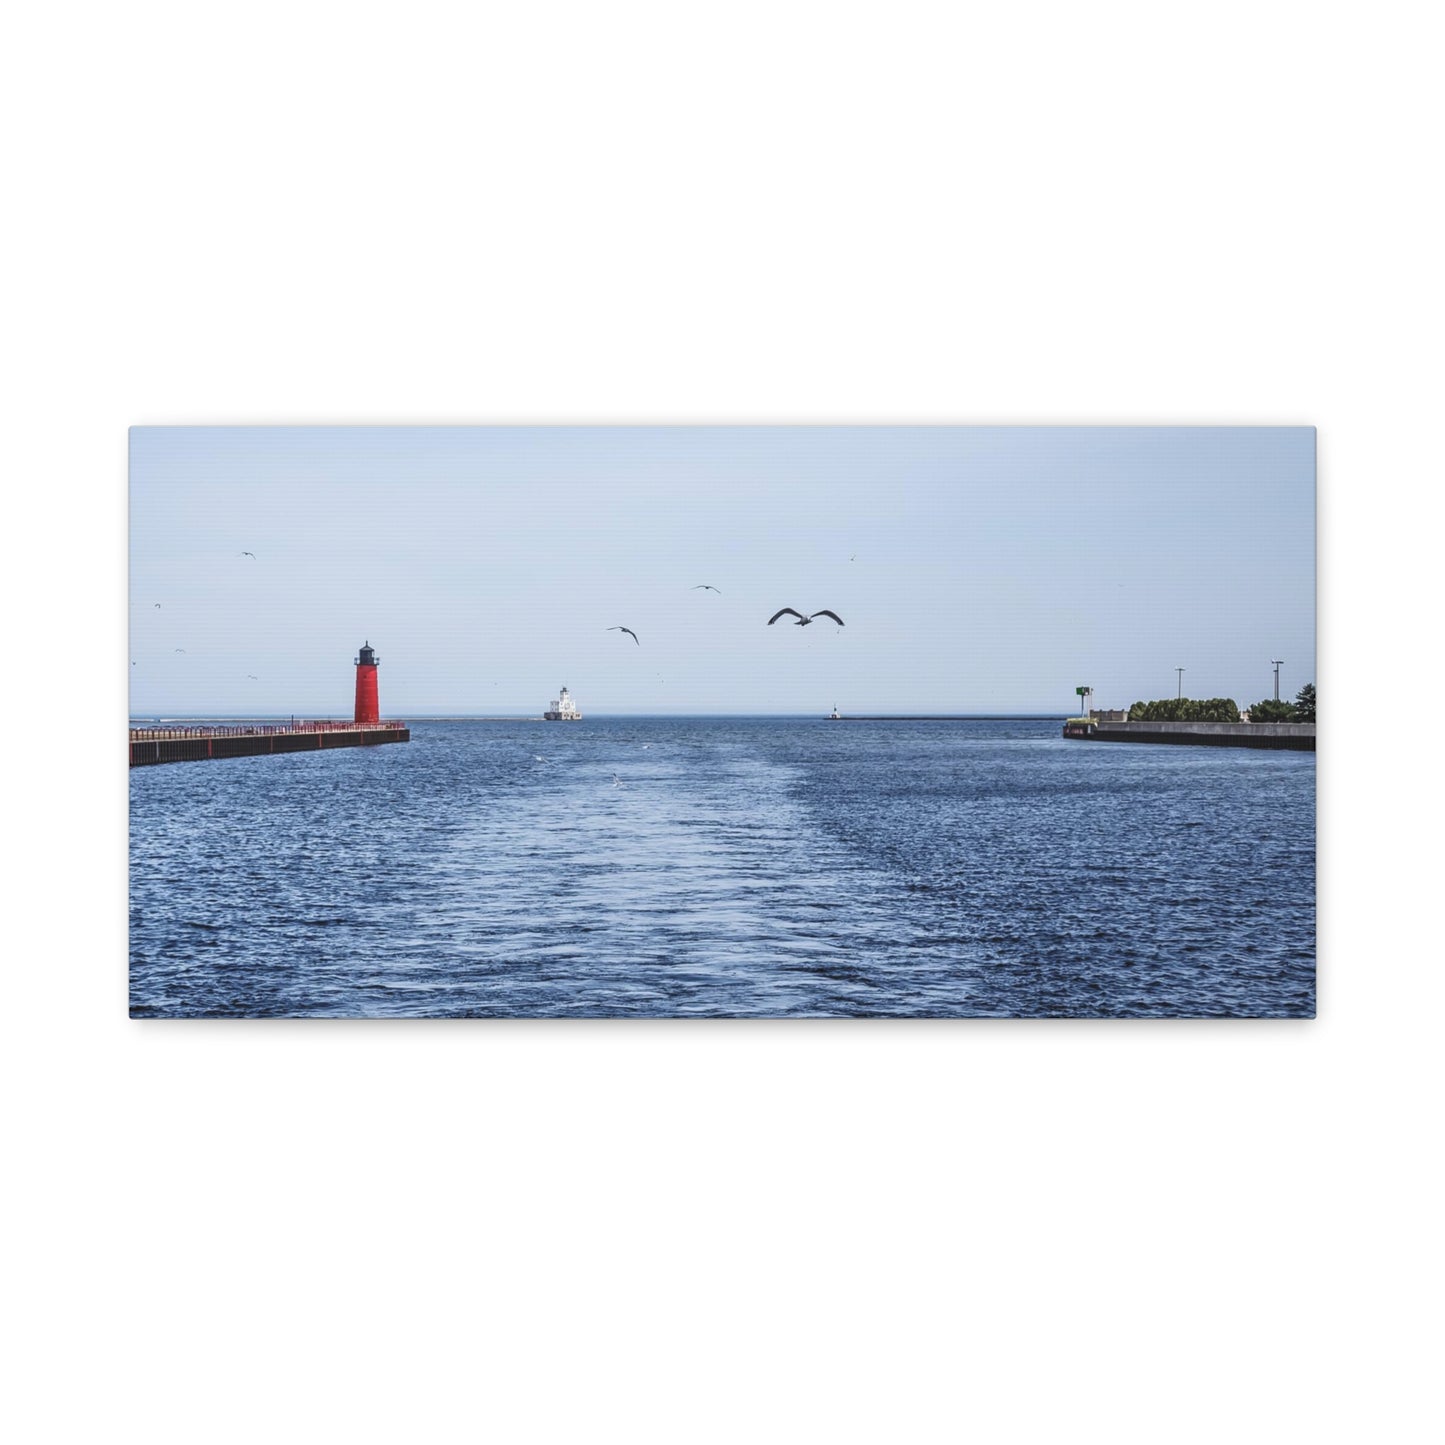 Milwaukee Pierhead Light & Breakwater Lighthouse with Seagulls, Photography Canvas Wrap Wall Art